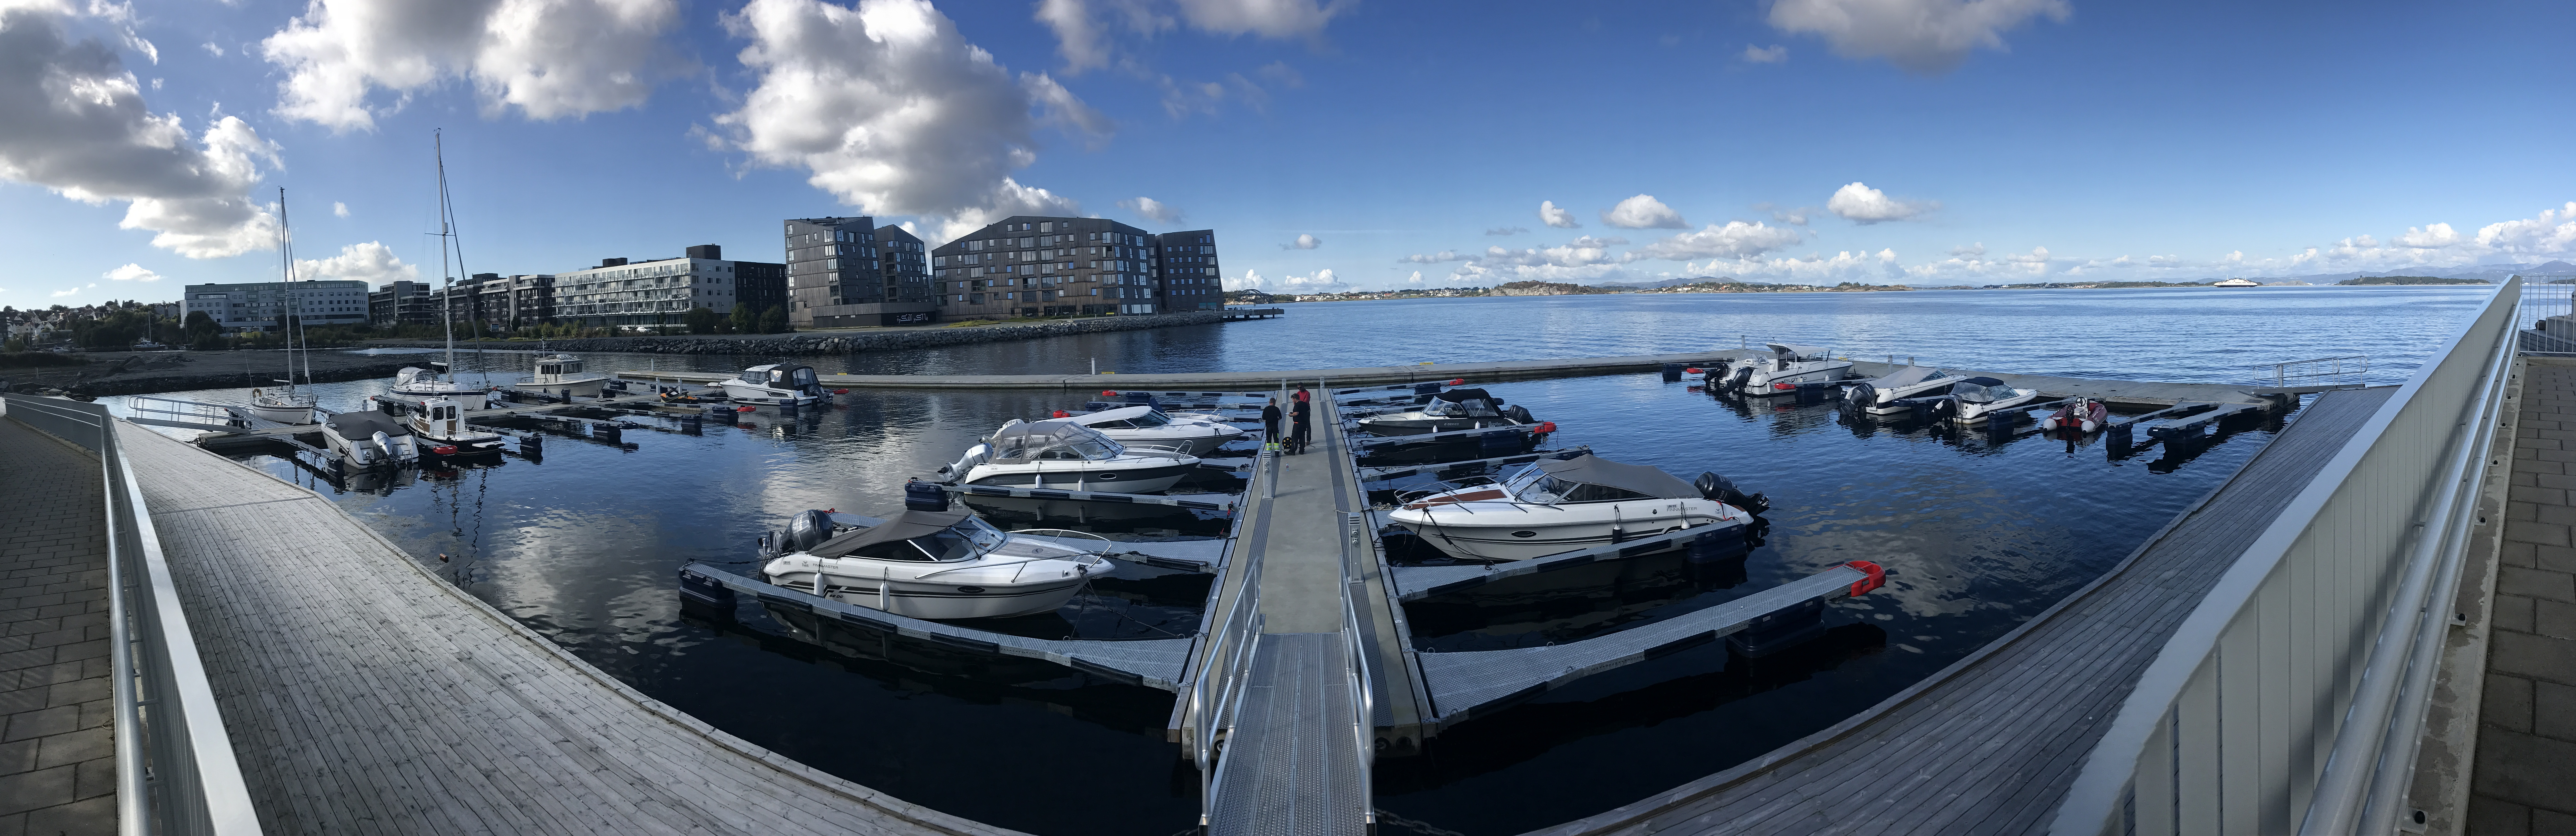 https://marinasolutions.no/uploads/Lervig-Brygge-Stavanger-Øst_2021-02-19-115231.JPG